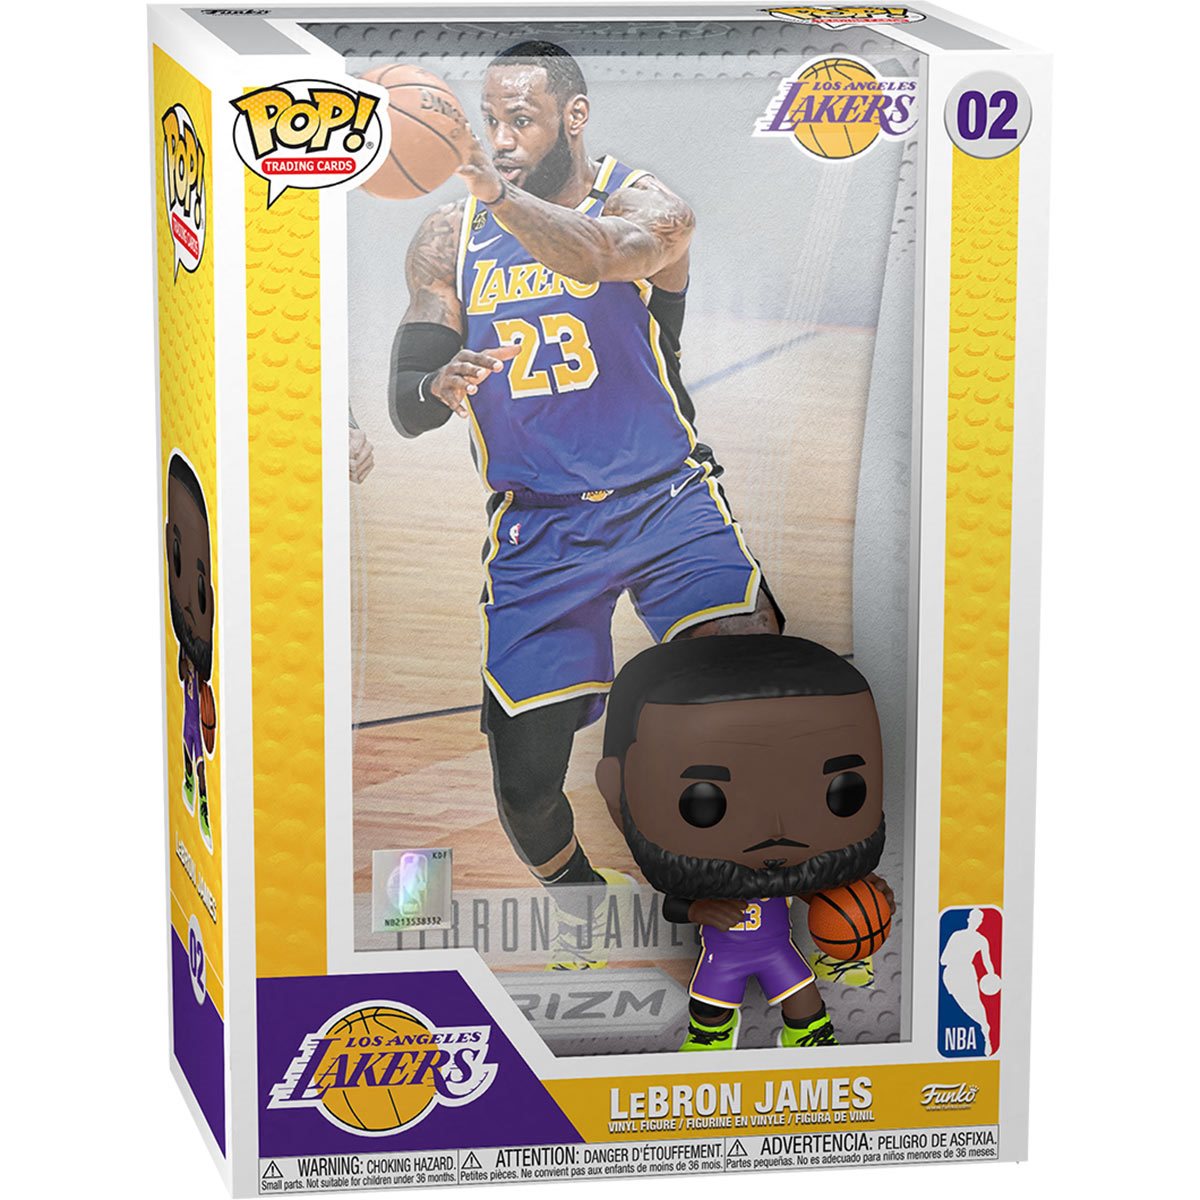 NBA: Lakers - LeBron James Pop! Trading Card Figure with Case Vinyl Figure (02)